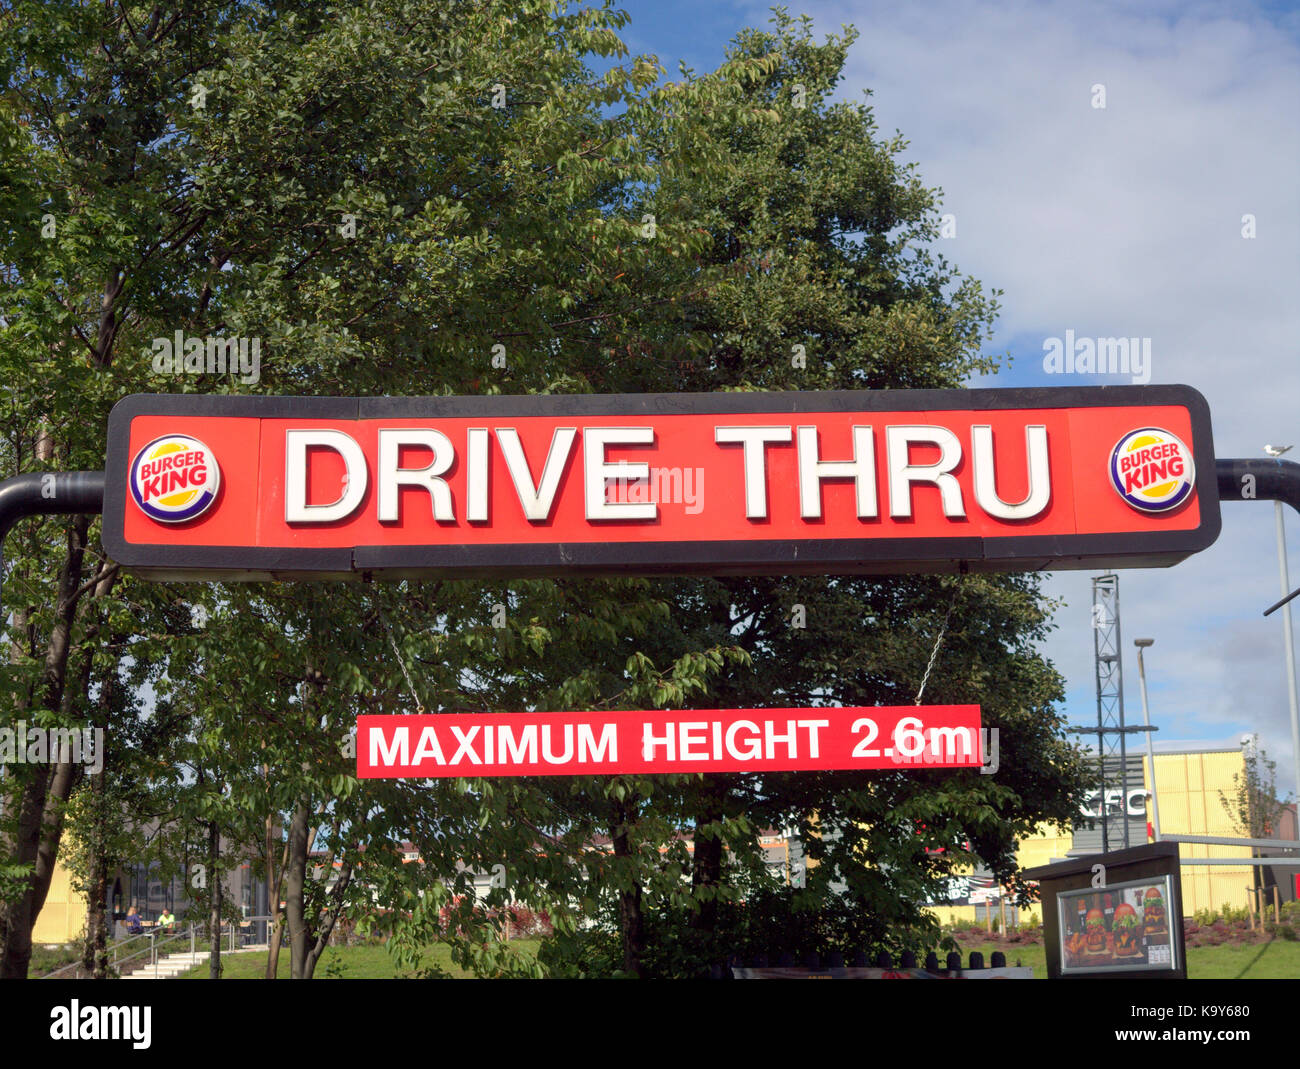 burger king sign drive thru maximum height 2.5m Stock Photo